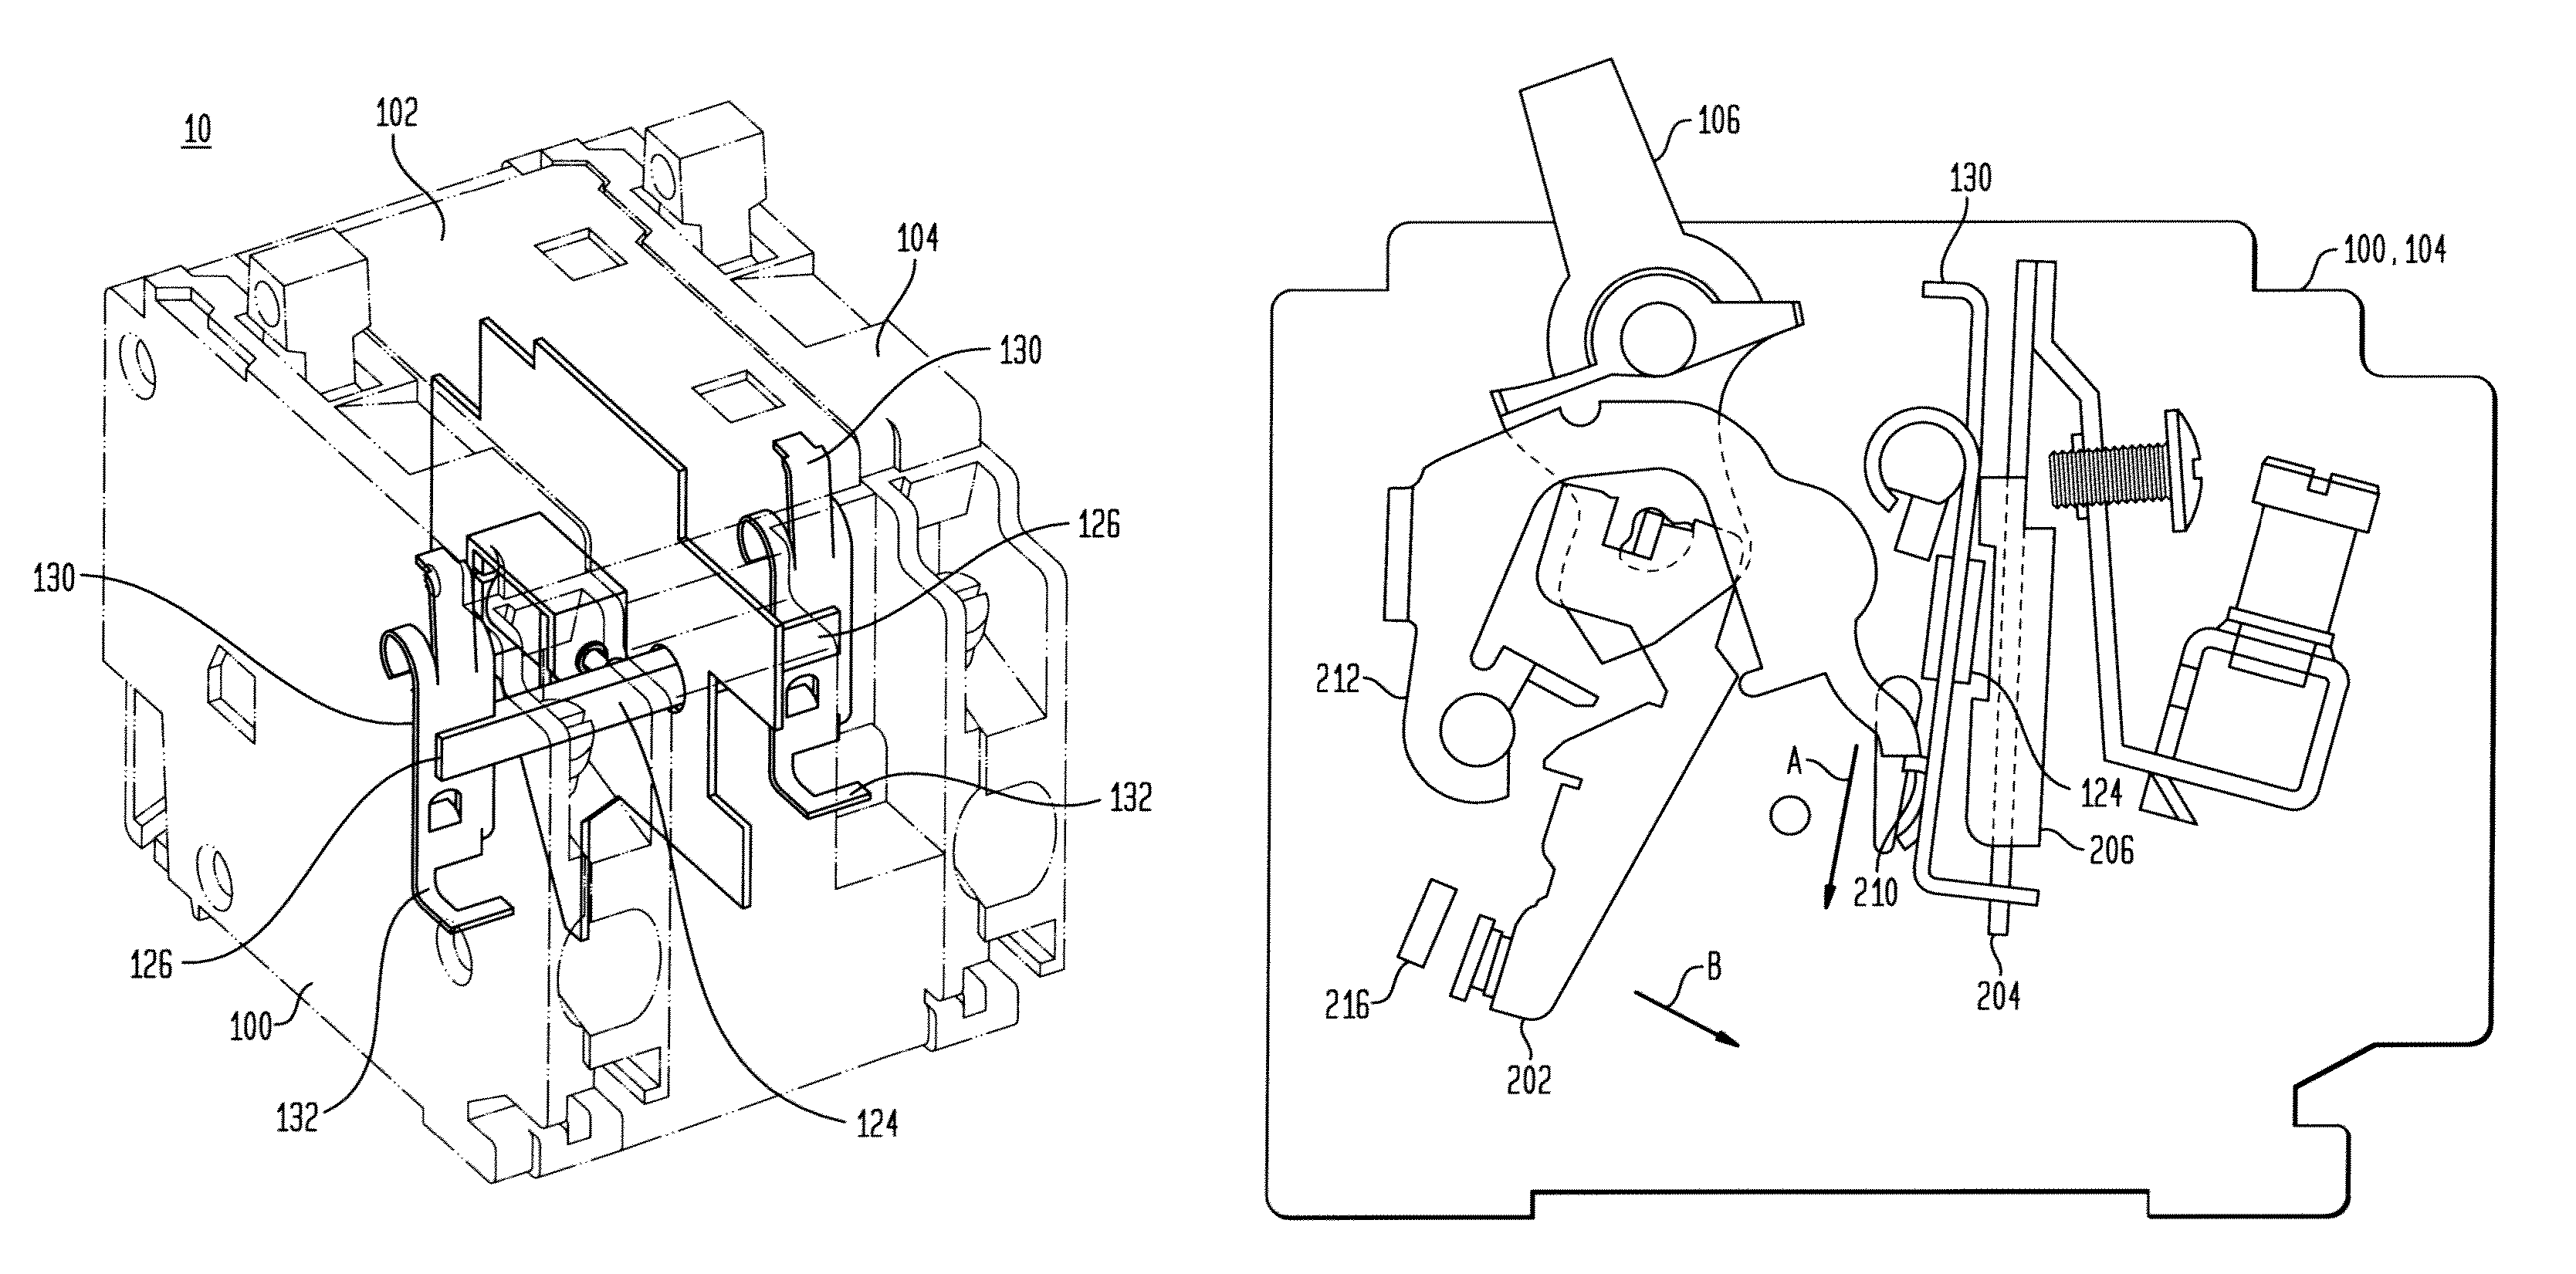 Multi-pole armature interlock for circuit breakers